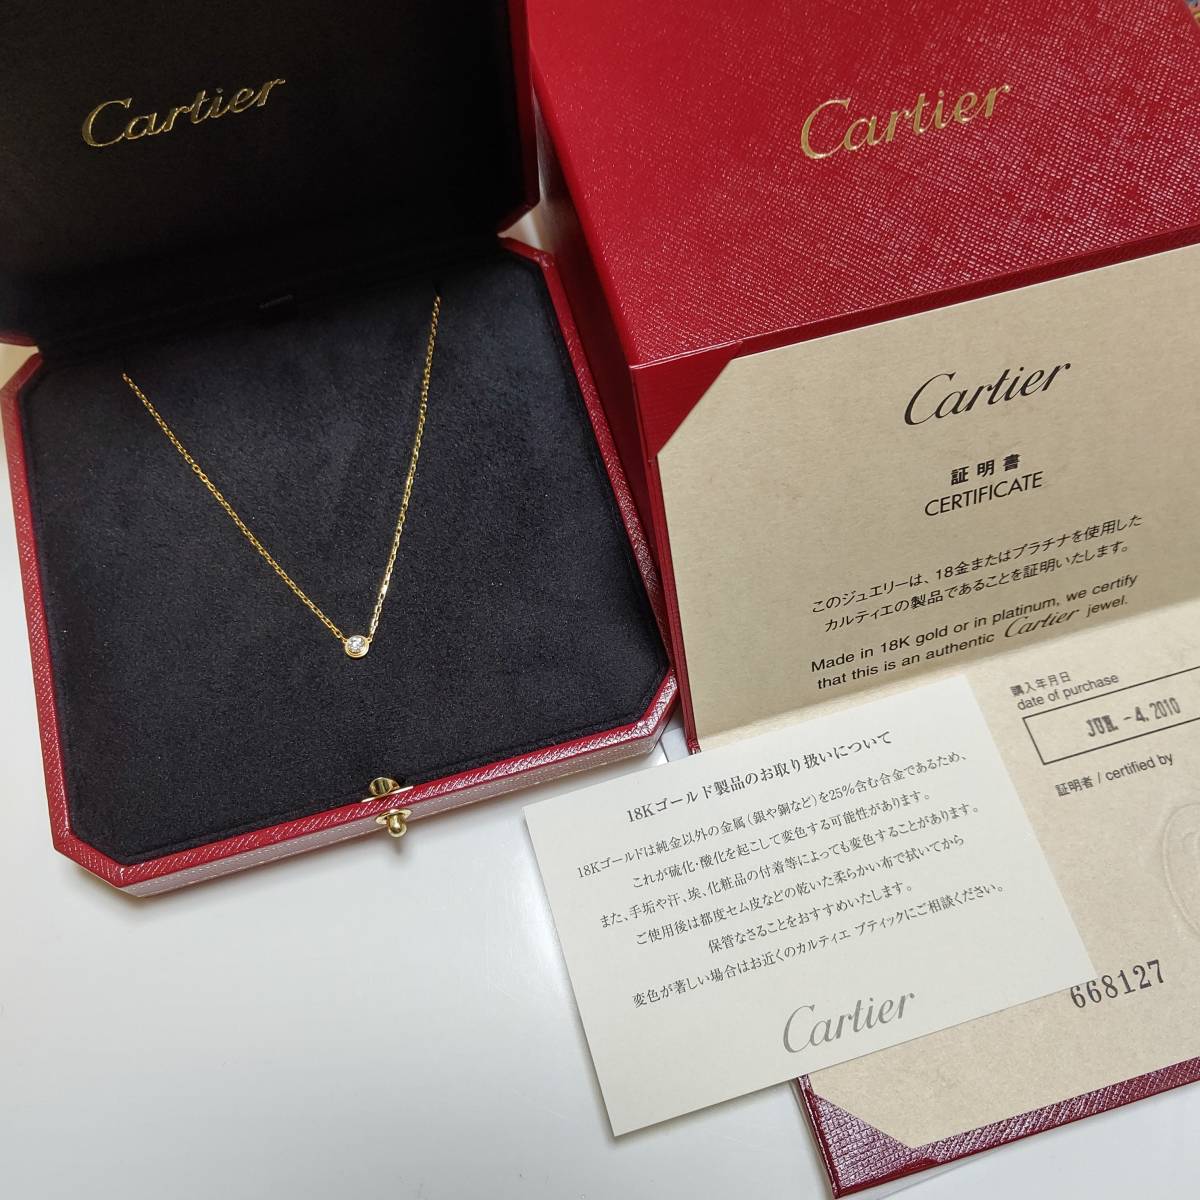 Cartier ダムールネックレス 正規品 カルティエ ダイヤモンド ゴールド ネックレス